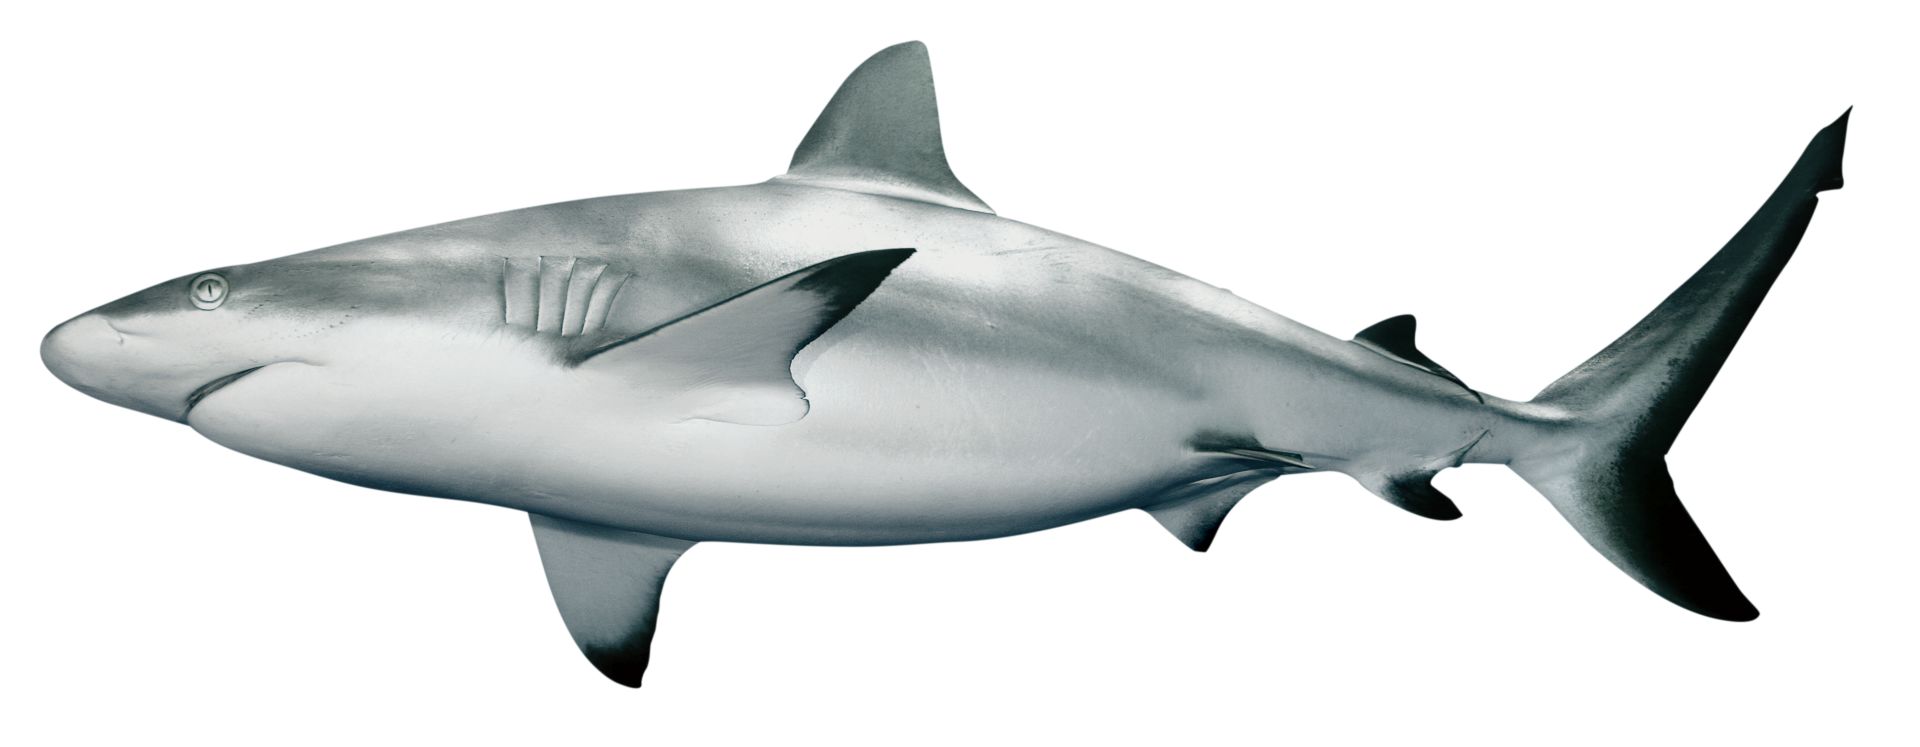 Detail Image Of A Shark Nomer 10